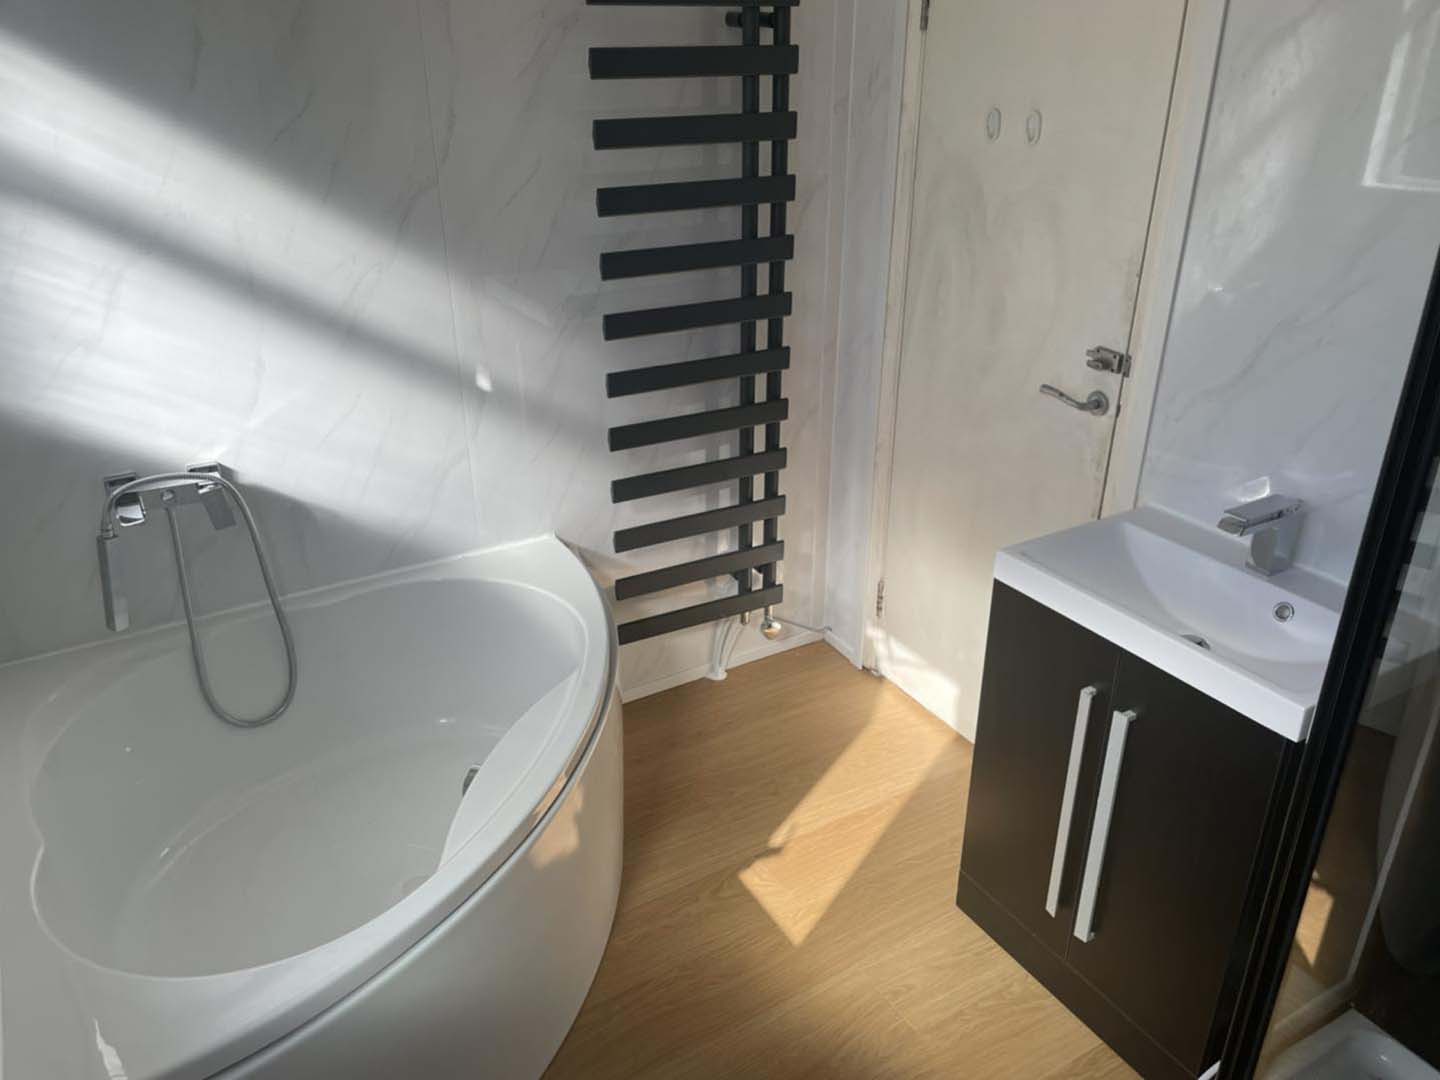 Corner bath with tall black radiator